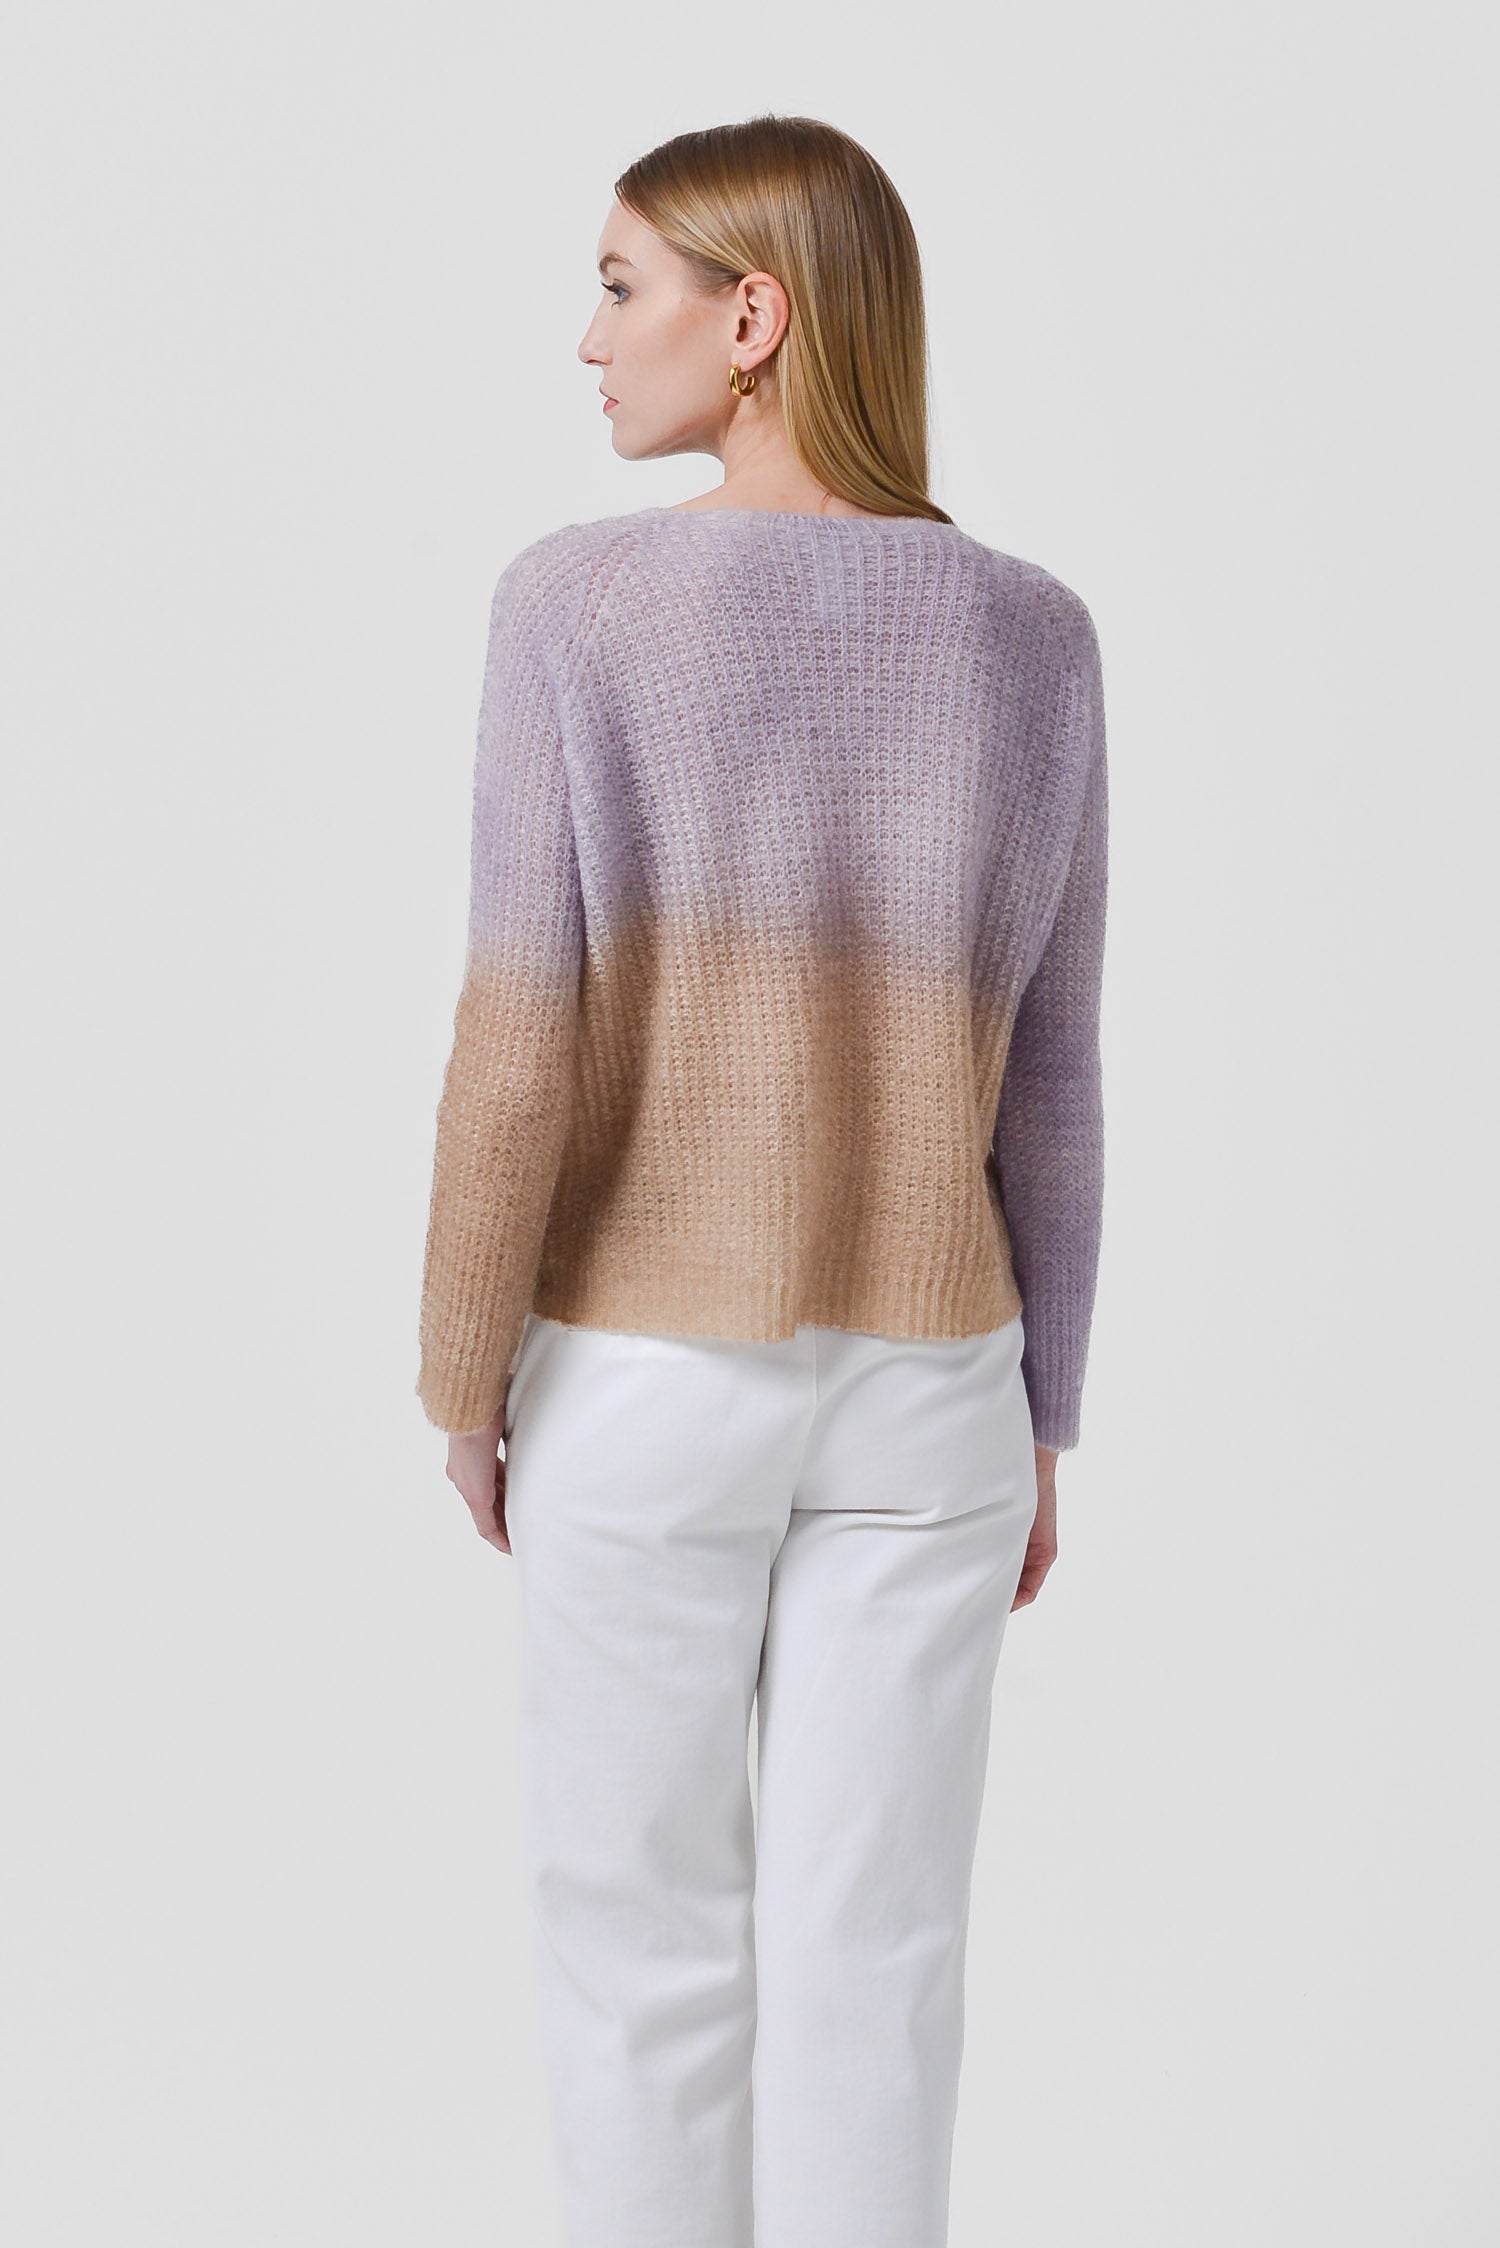 Cashel X-Spray Art Sweater - Heather